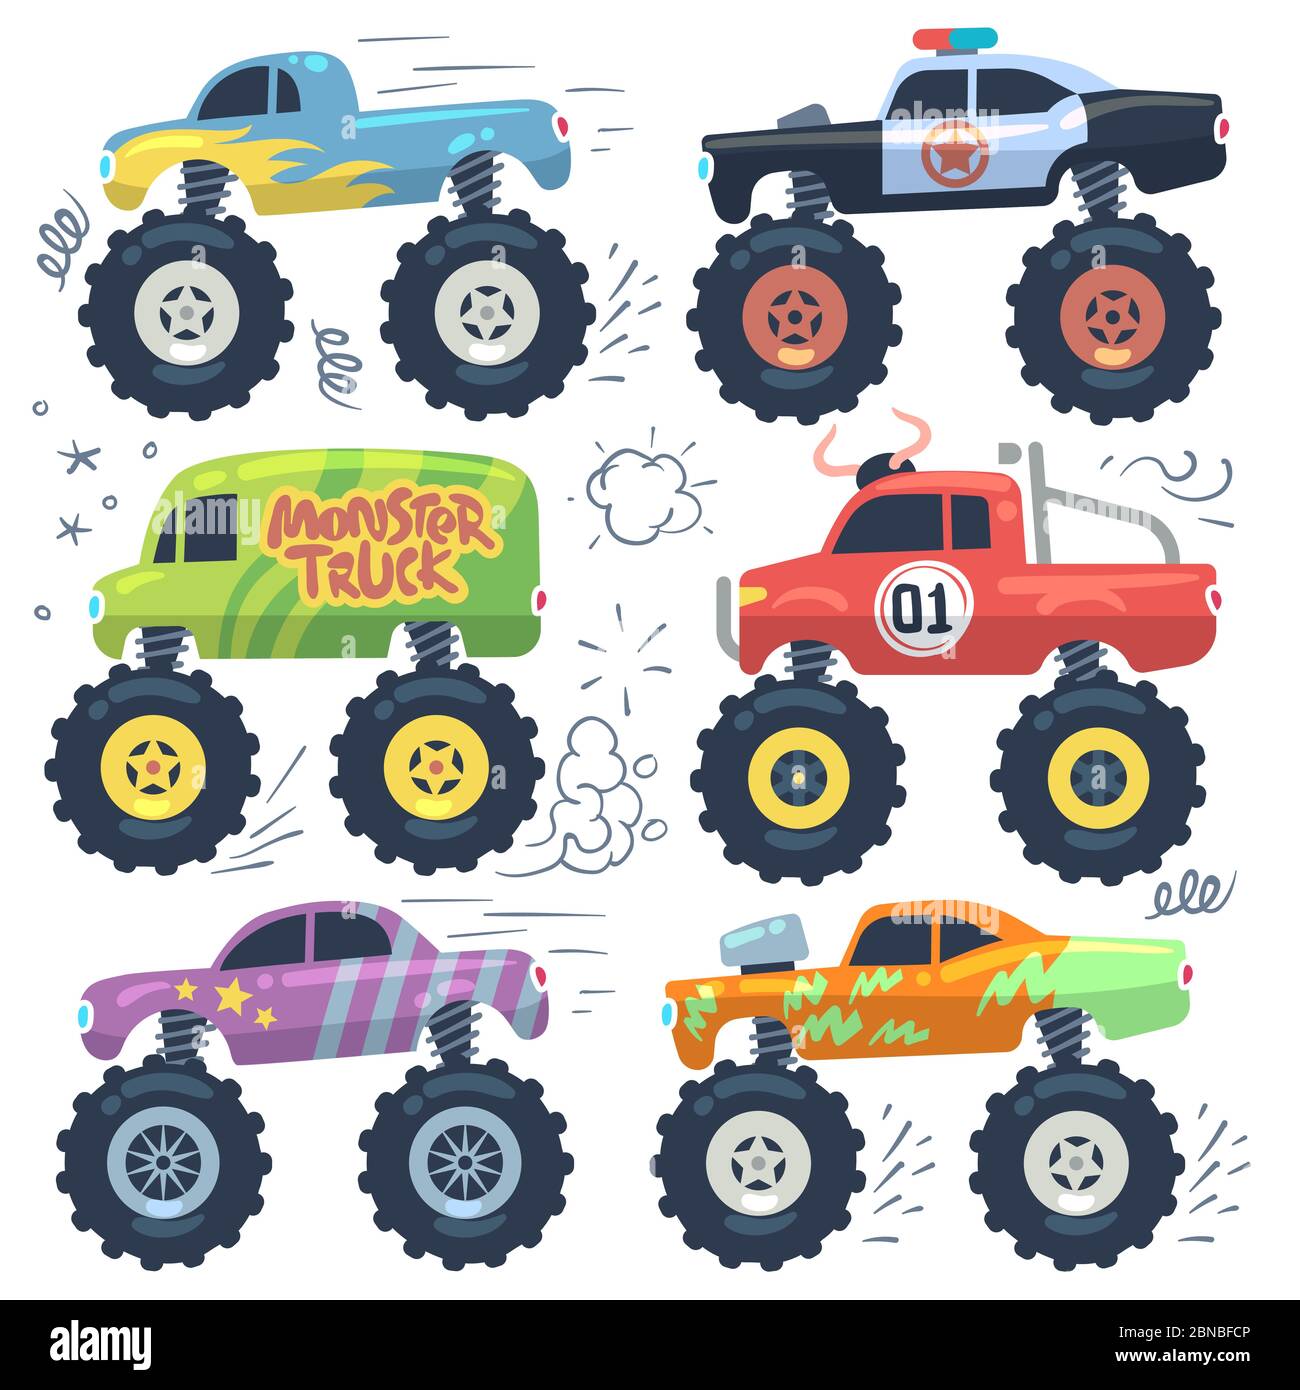 Monsterautos. Cartoon Autos mit großen Rädern. Isolierter Vektorsatz. Illustration der Transport Monster Truck Sammlung Stock Vektor